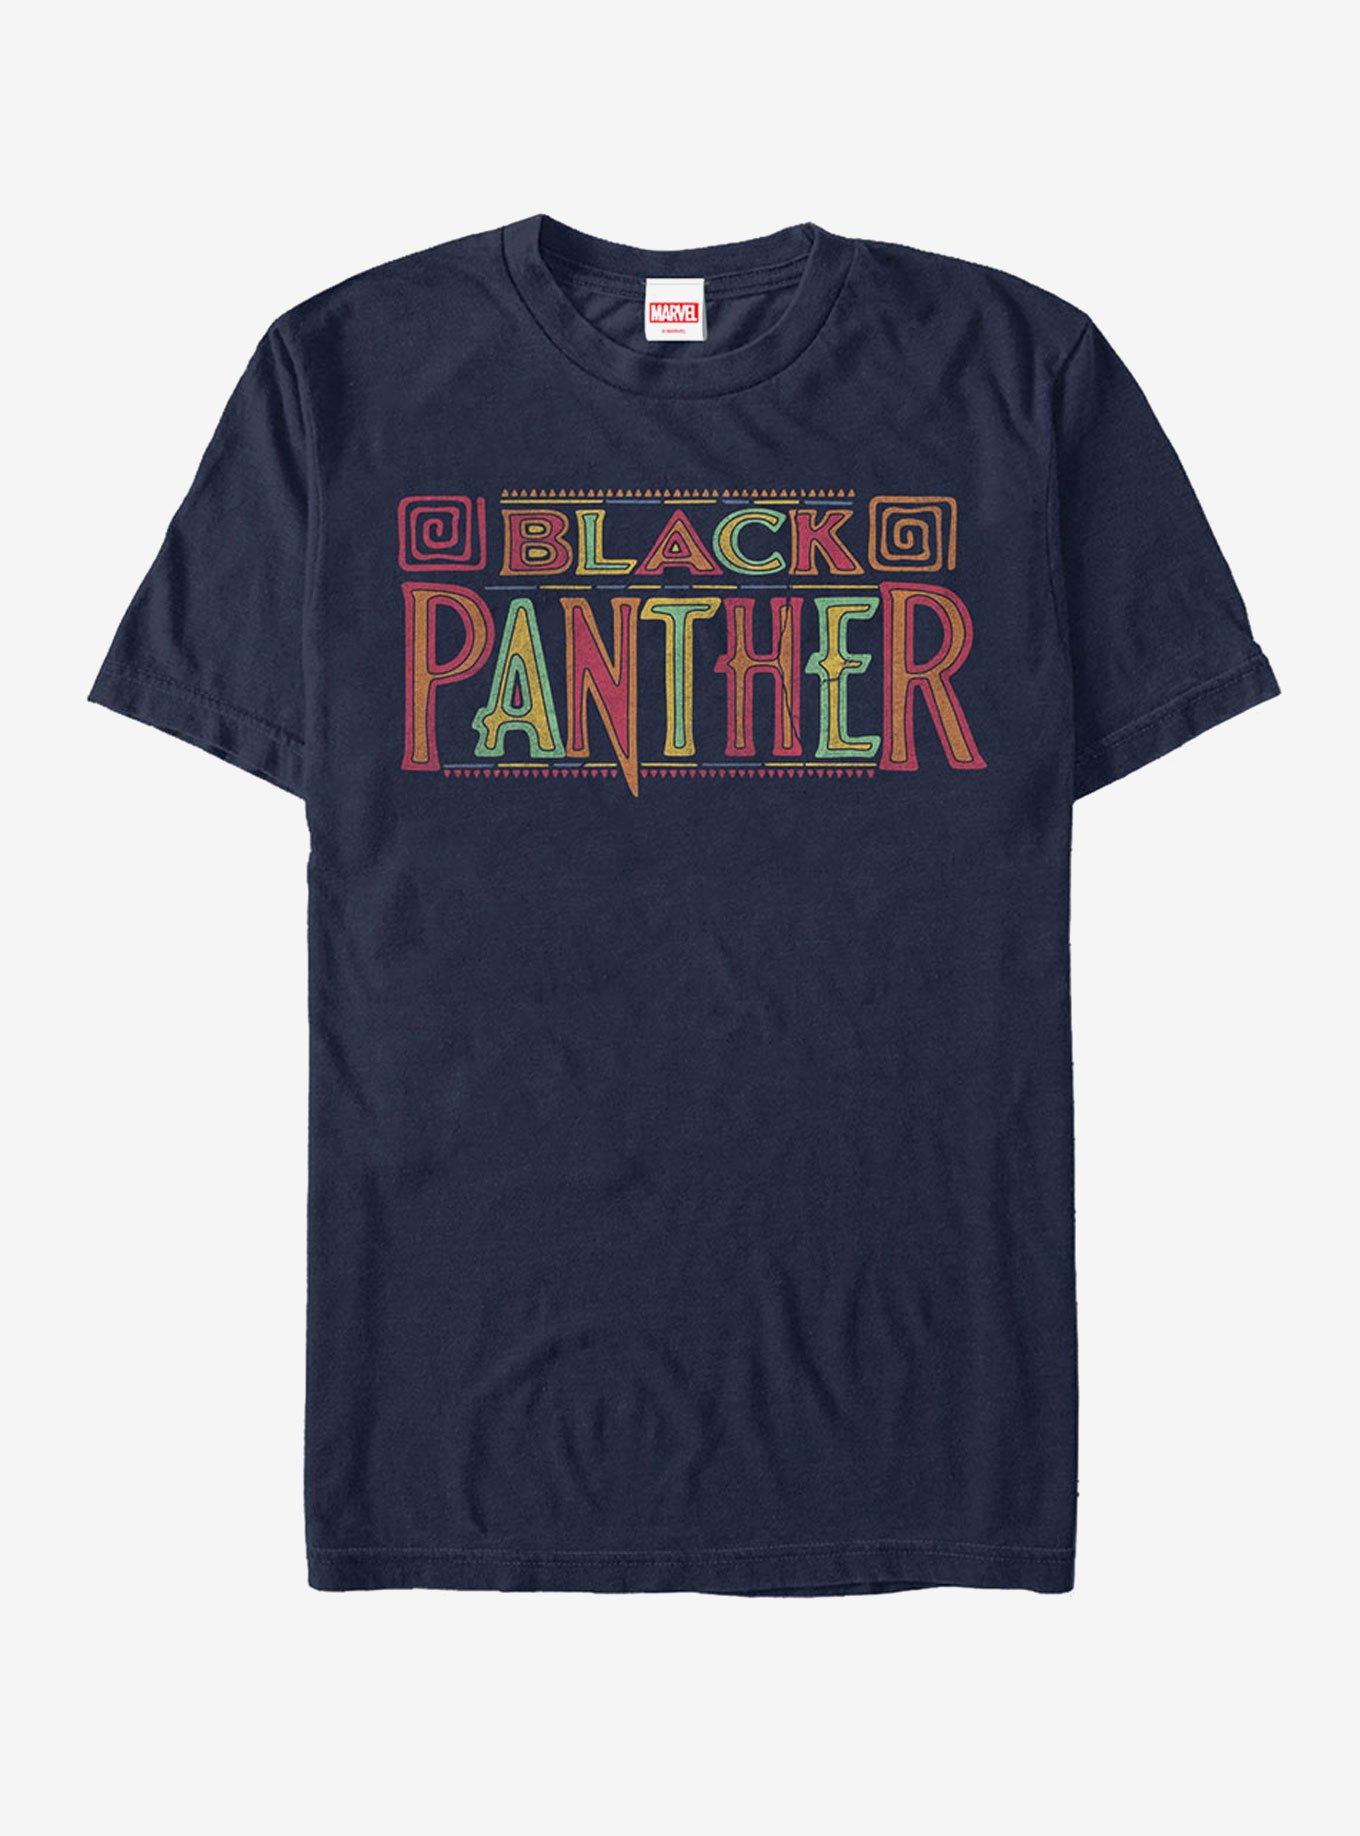 Marvel Black Panther 2018 Bright Title T-Shirt, NAVY, hi-res